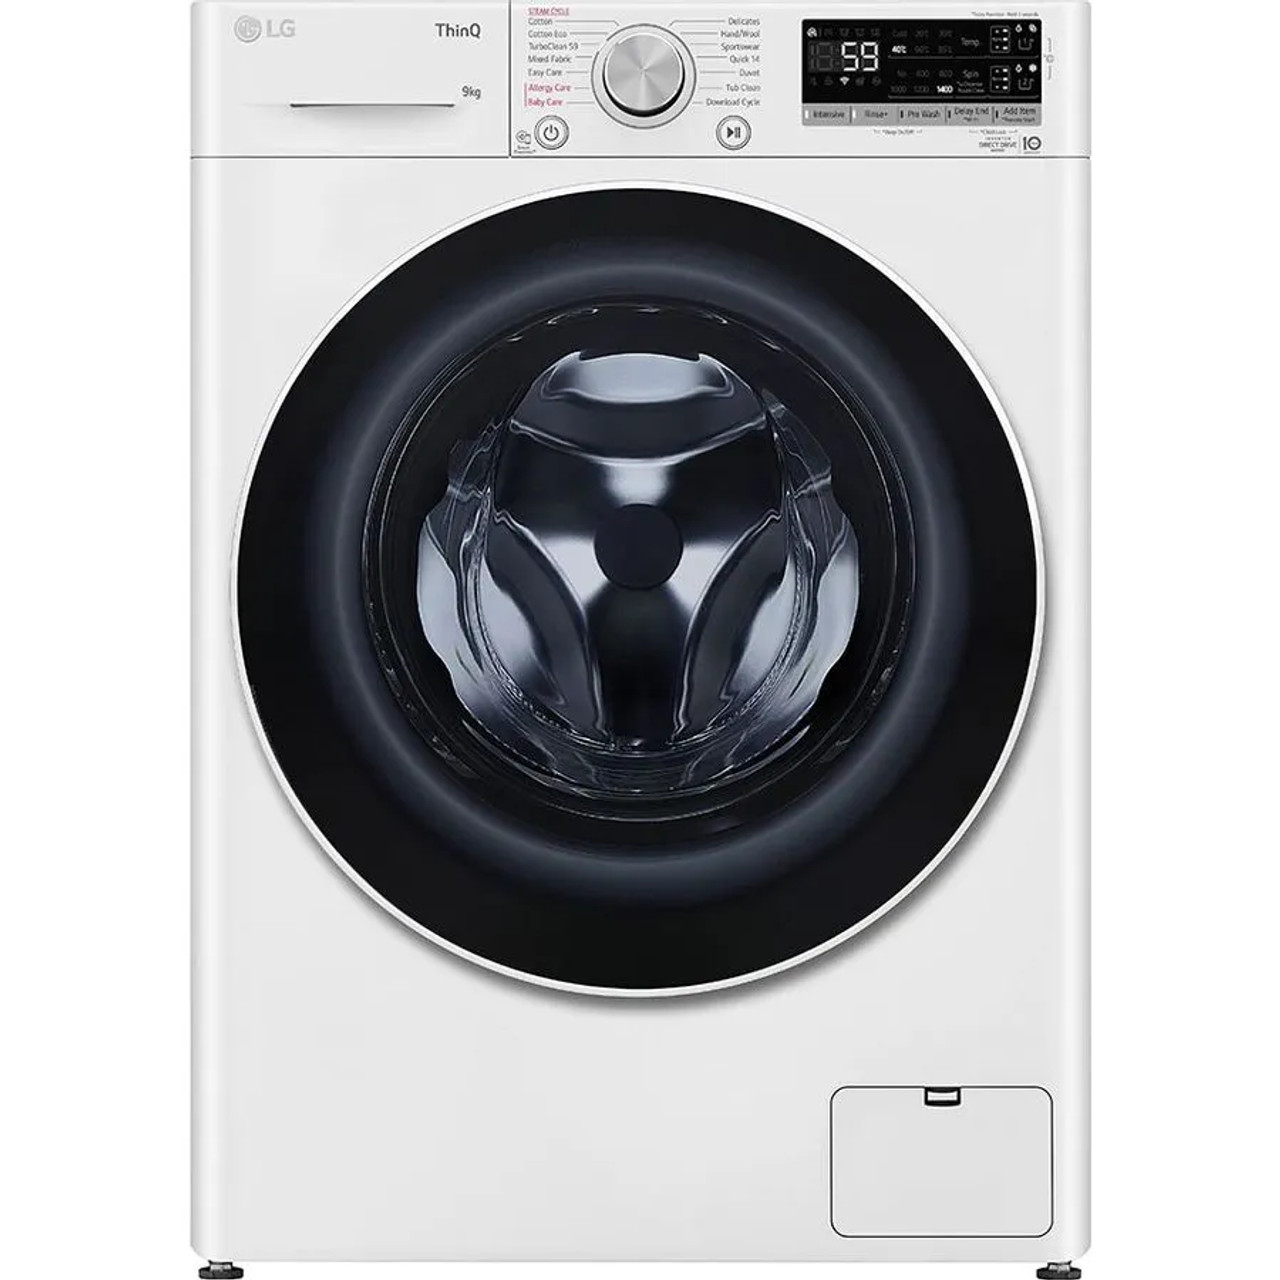 WV61409W - Series 6 9kg Front Load Washing Machine - White